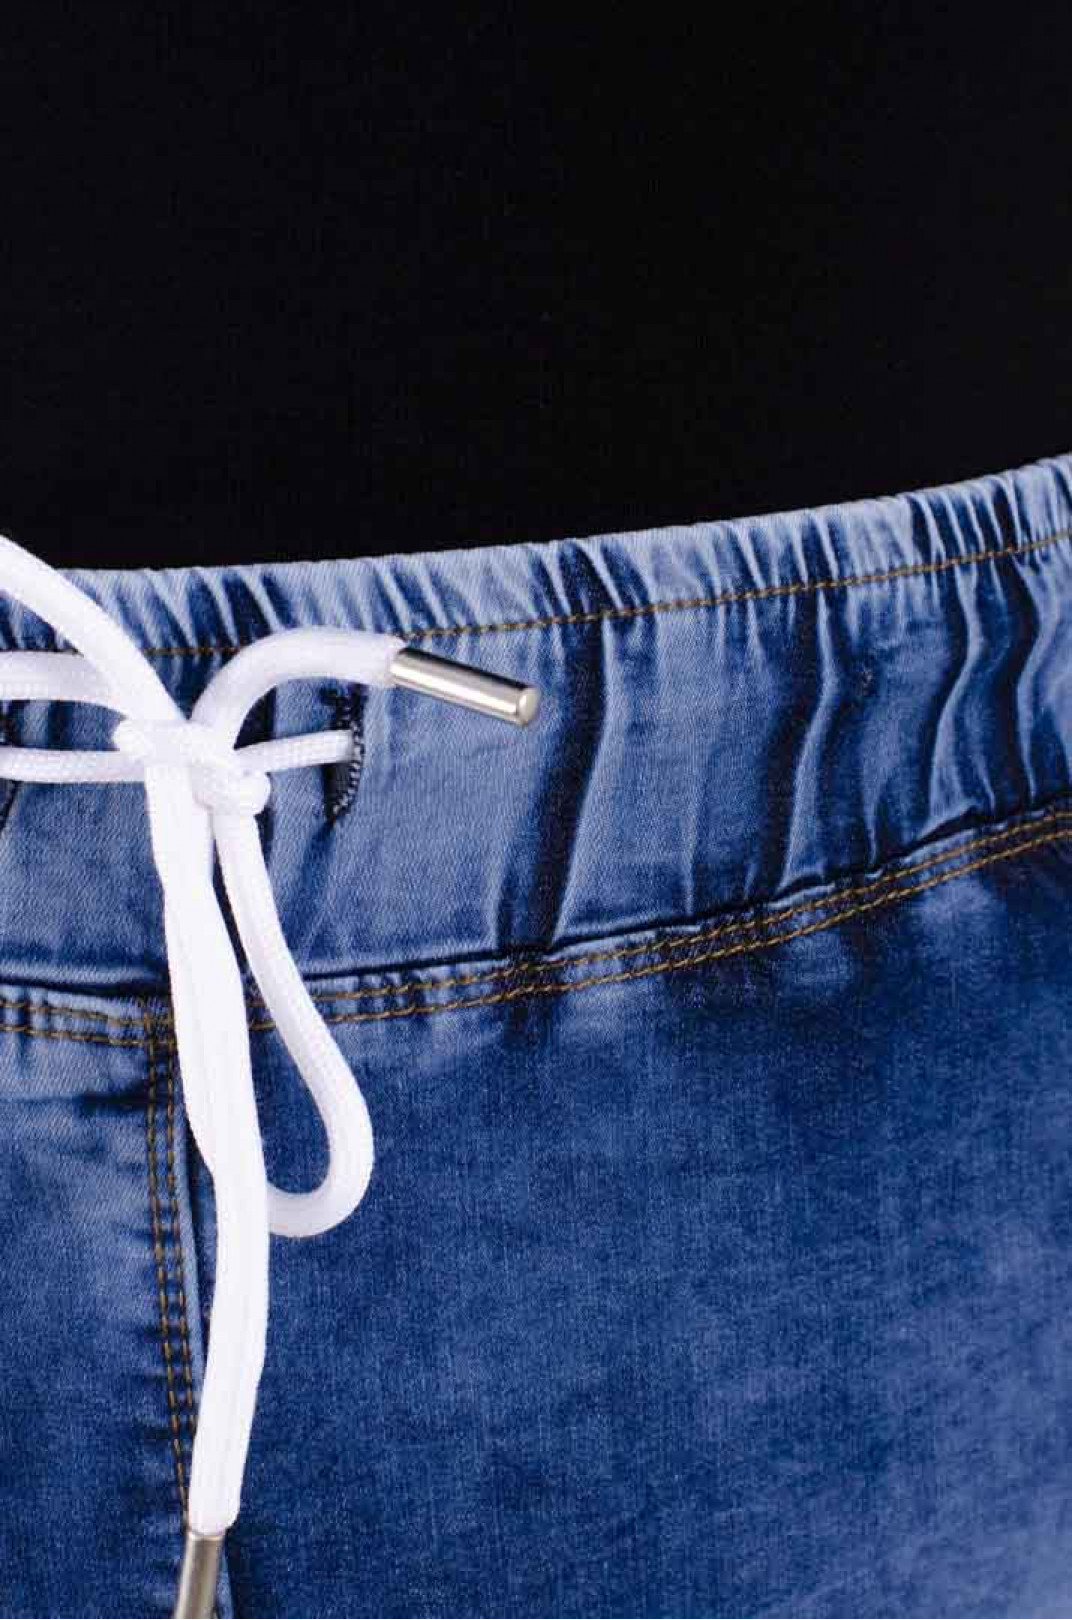 Юбка джинсовая трапеция батал